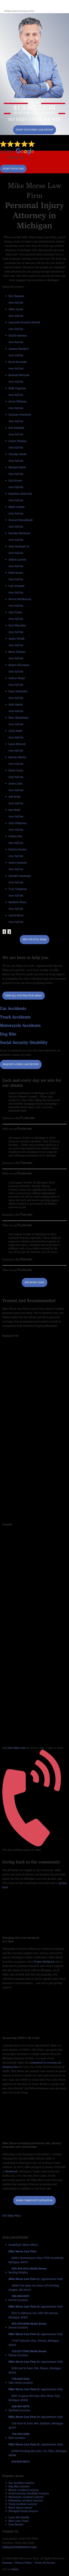 Mike Morse Law Firm - Southfield MI Lawyers